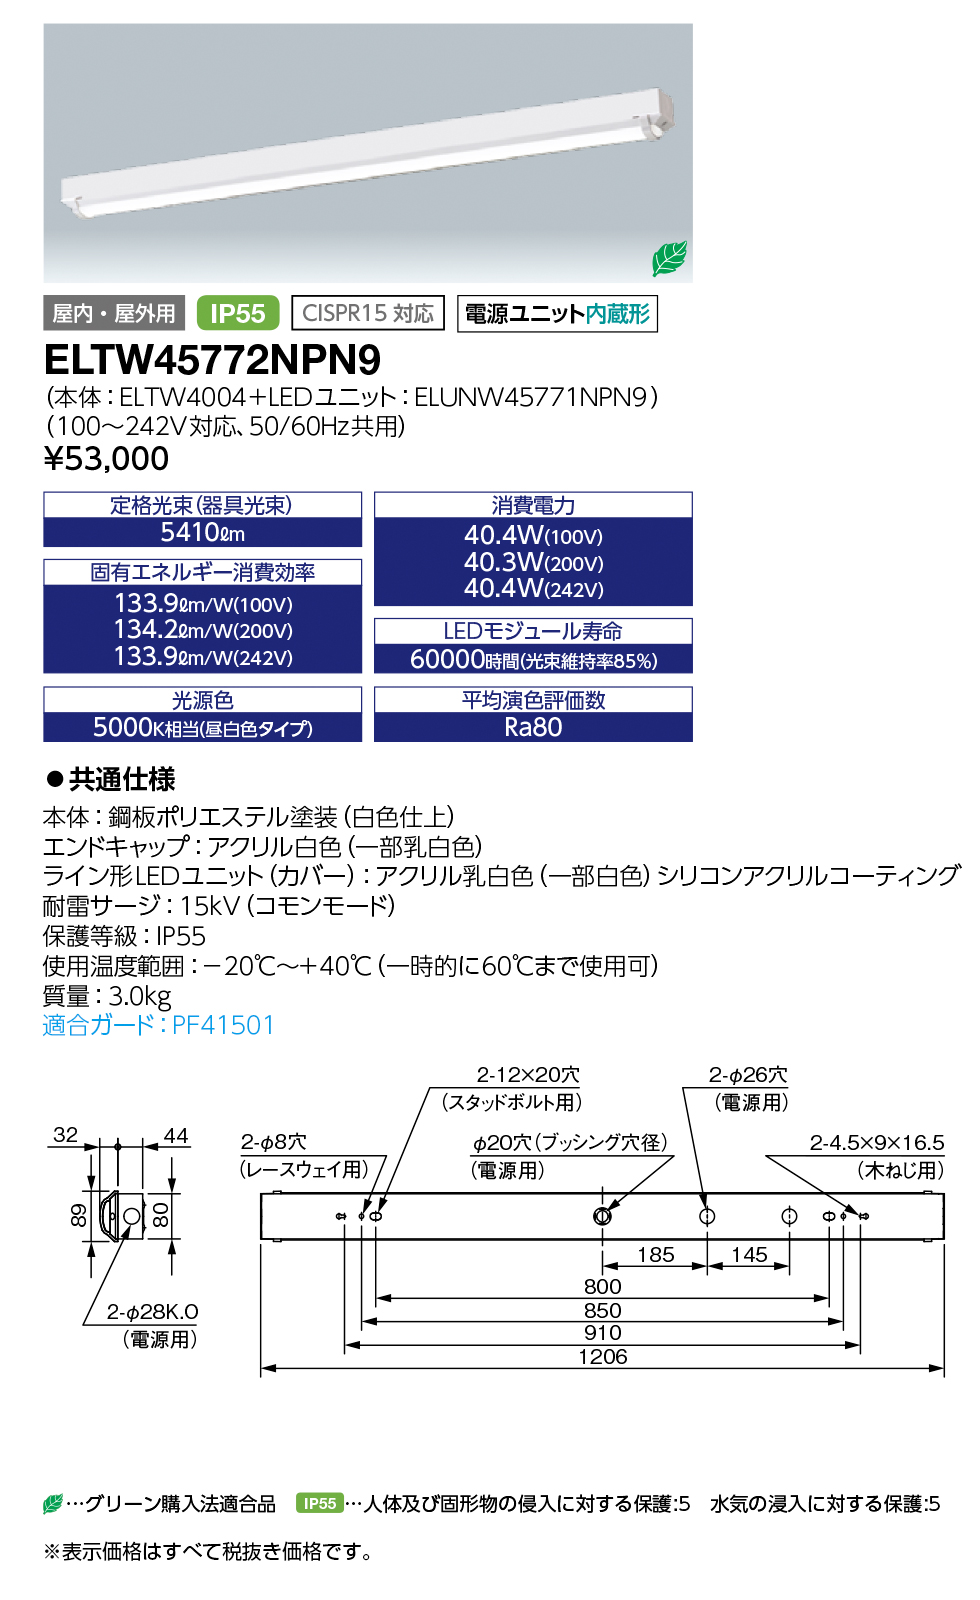 ELTW45772NPN9